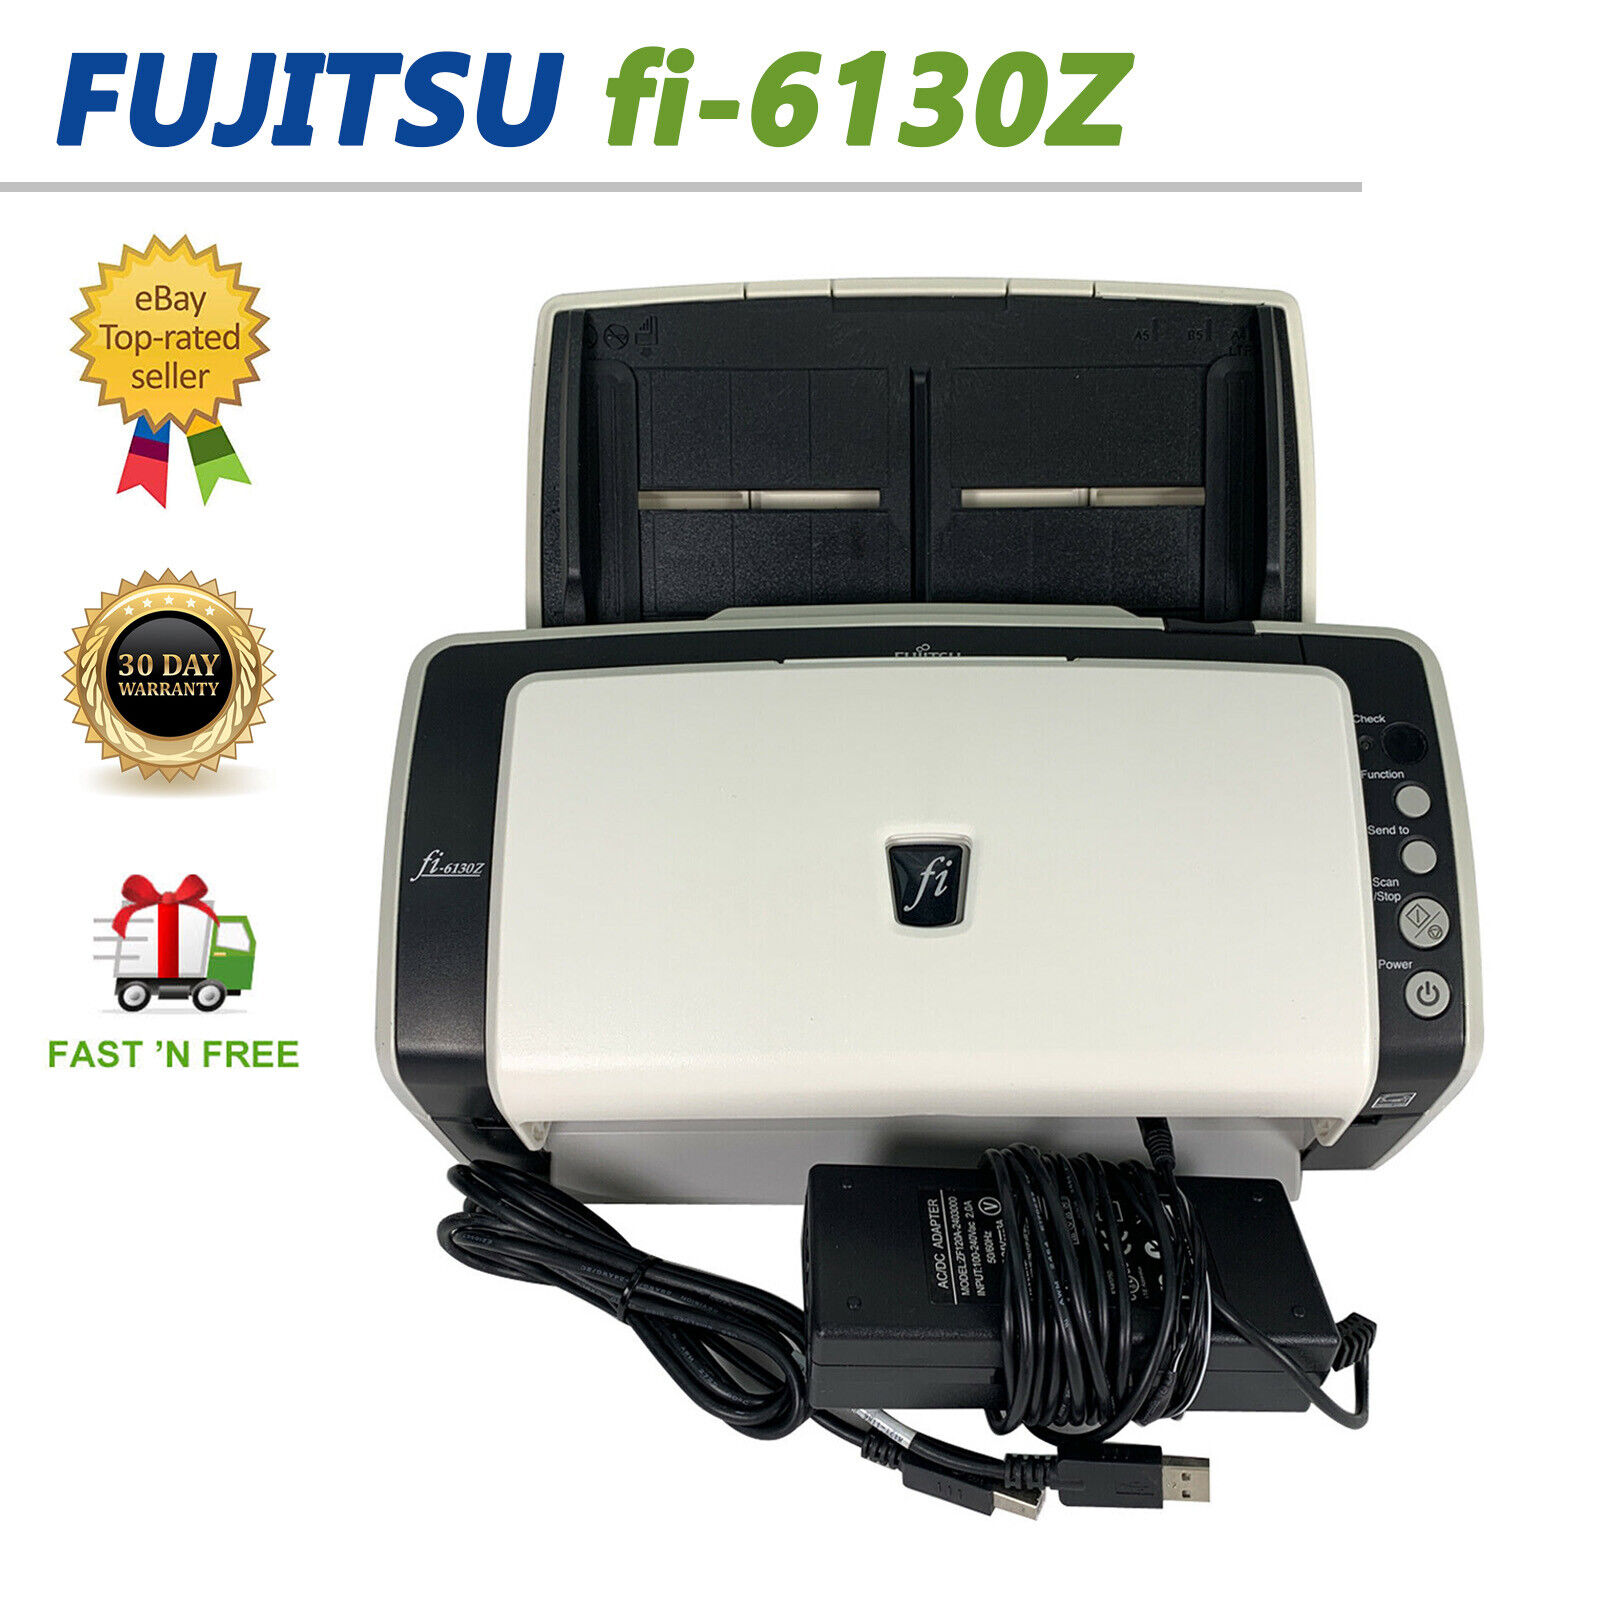 GOOD 🔥 Genuine Fujitsu FI-6130Z Duplex Document Scanner w/Adapter & USB Cable